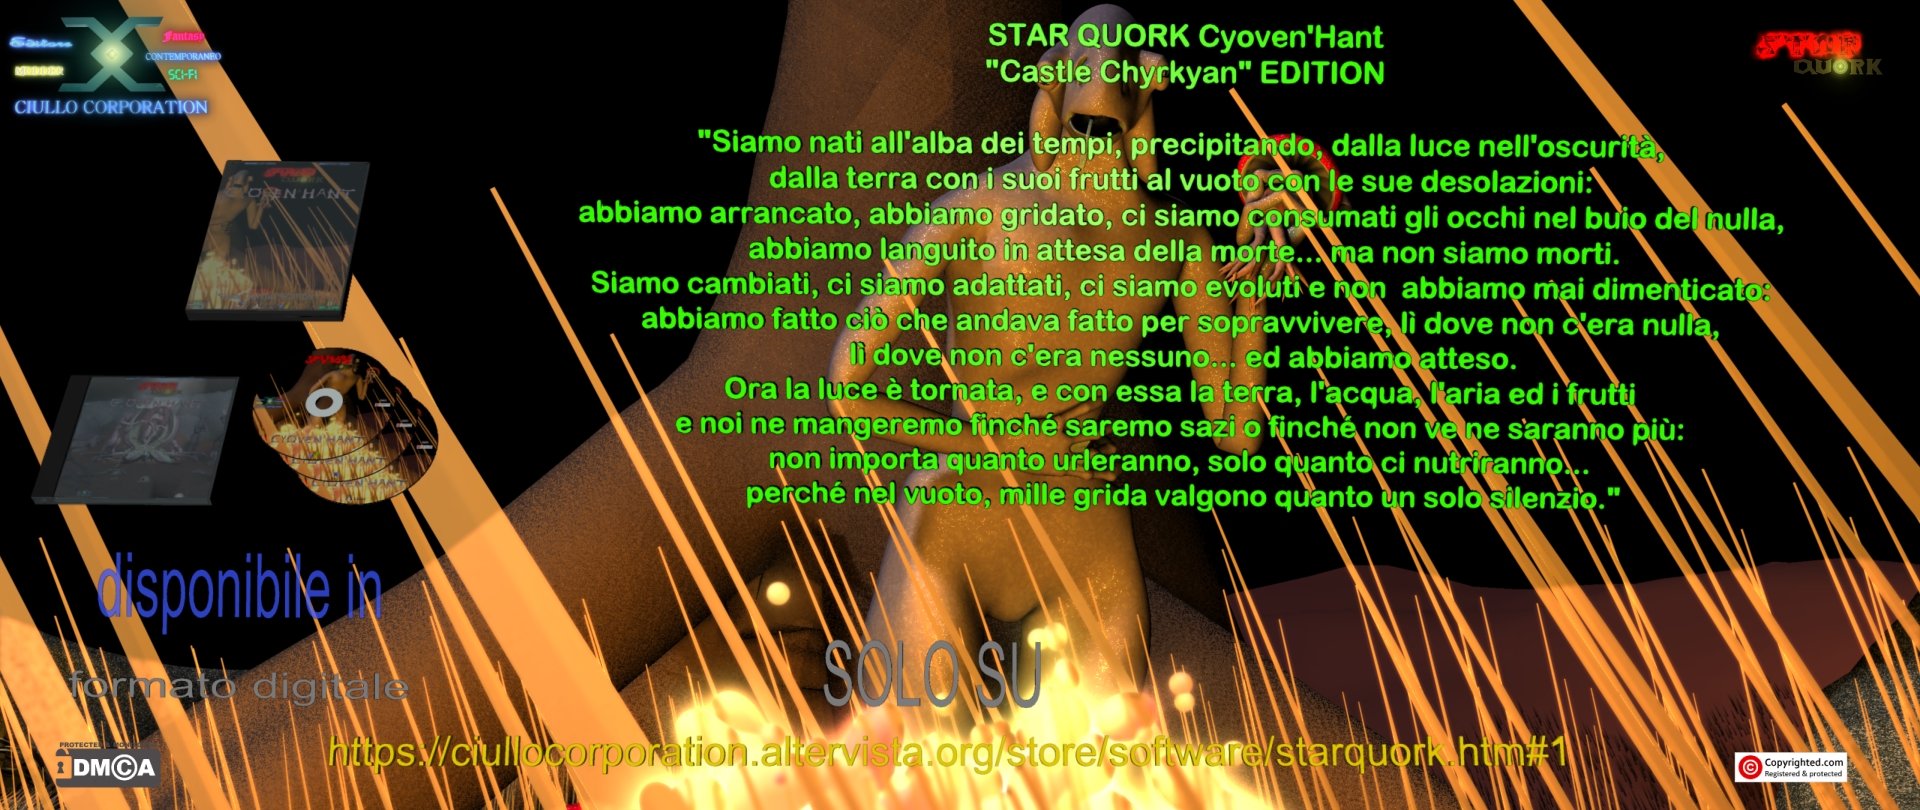 STAR QUORK Cyoven'Hant (ARTBOOK)